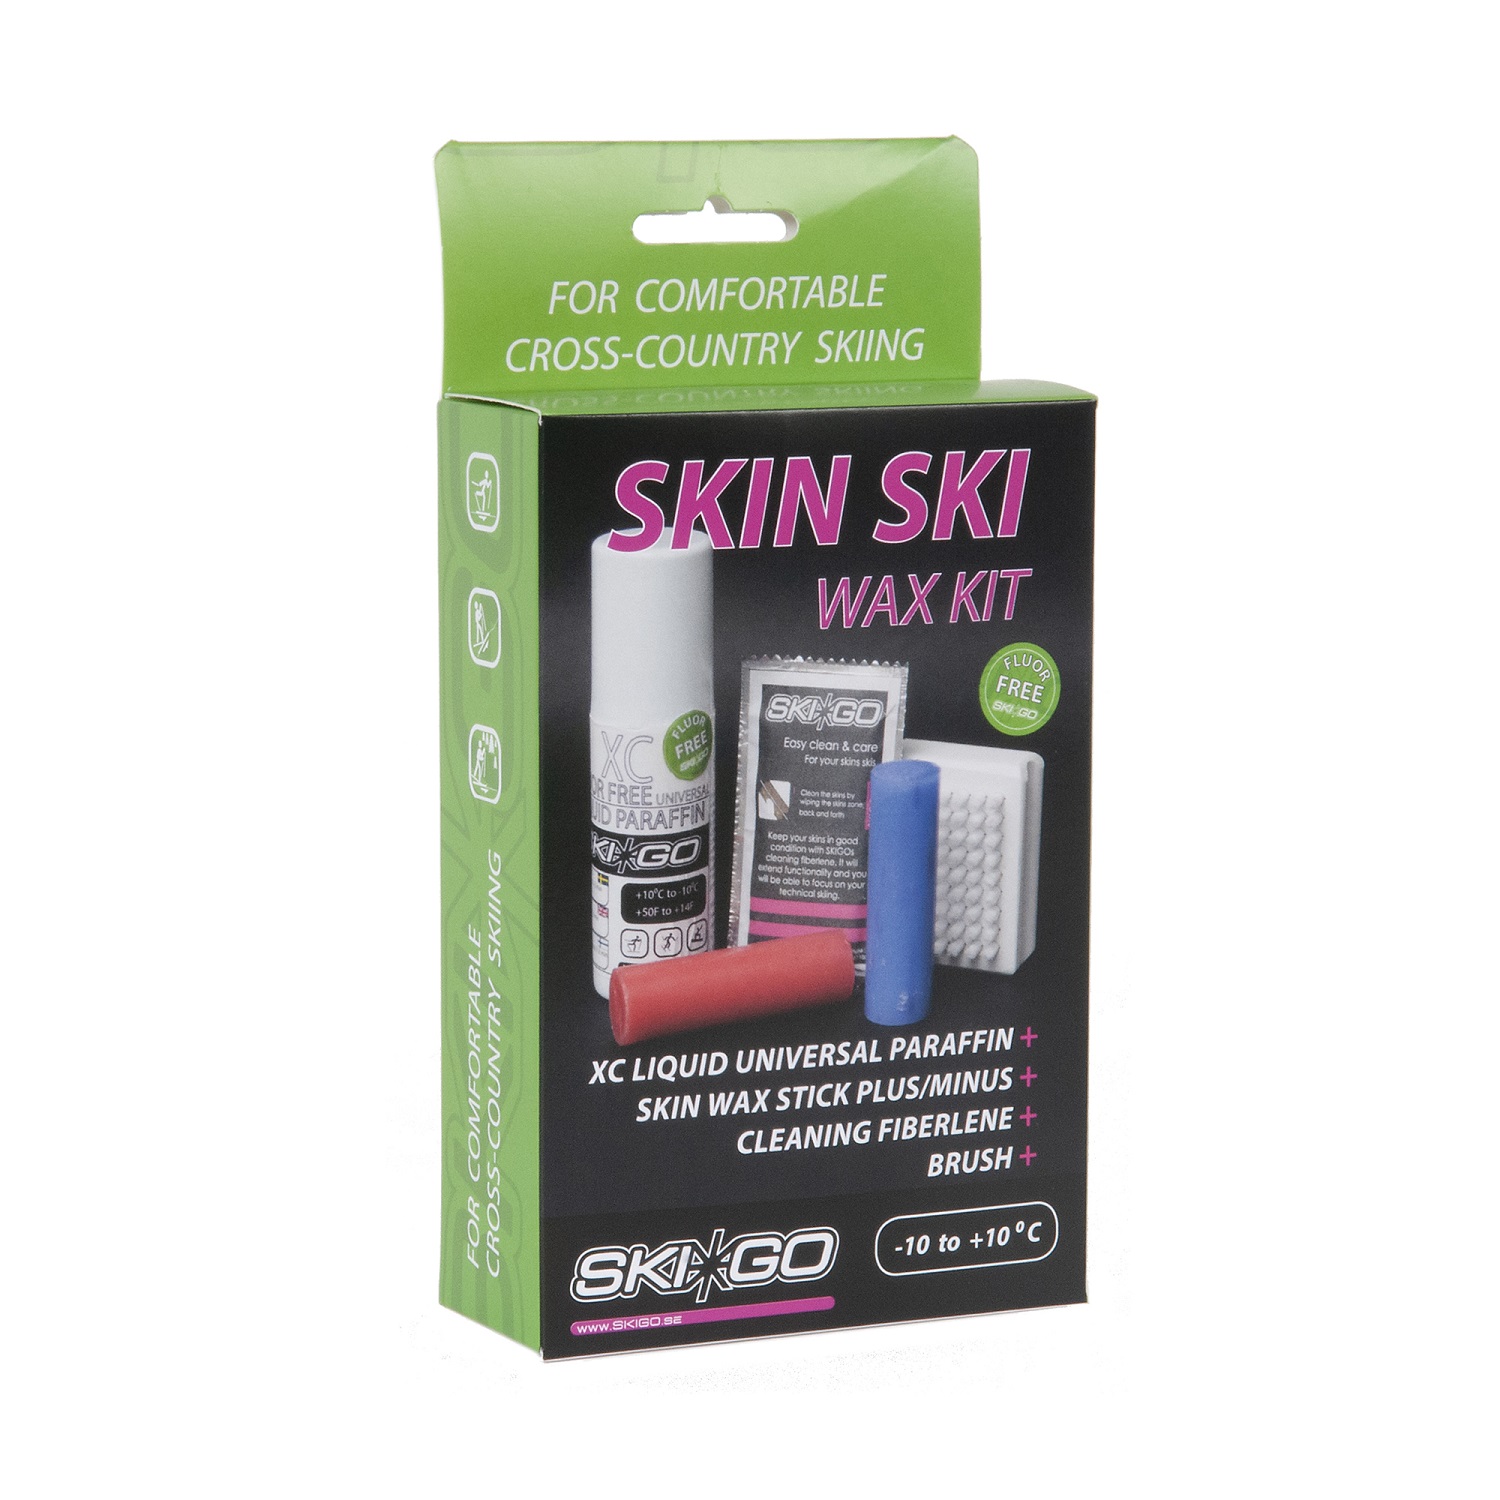 Skigo Skin Ski Wax Kit